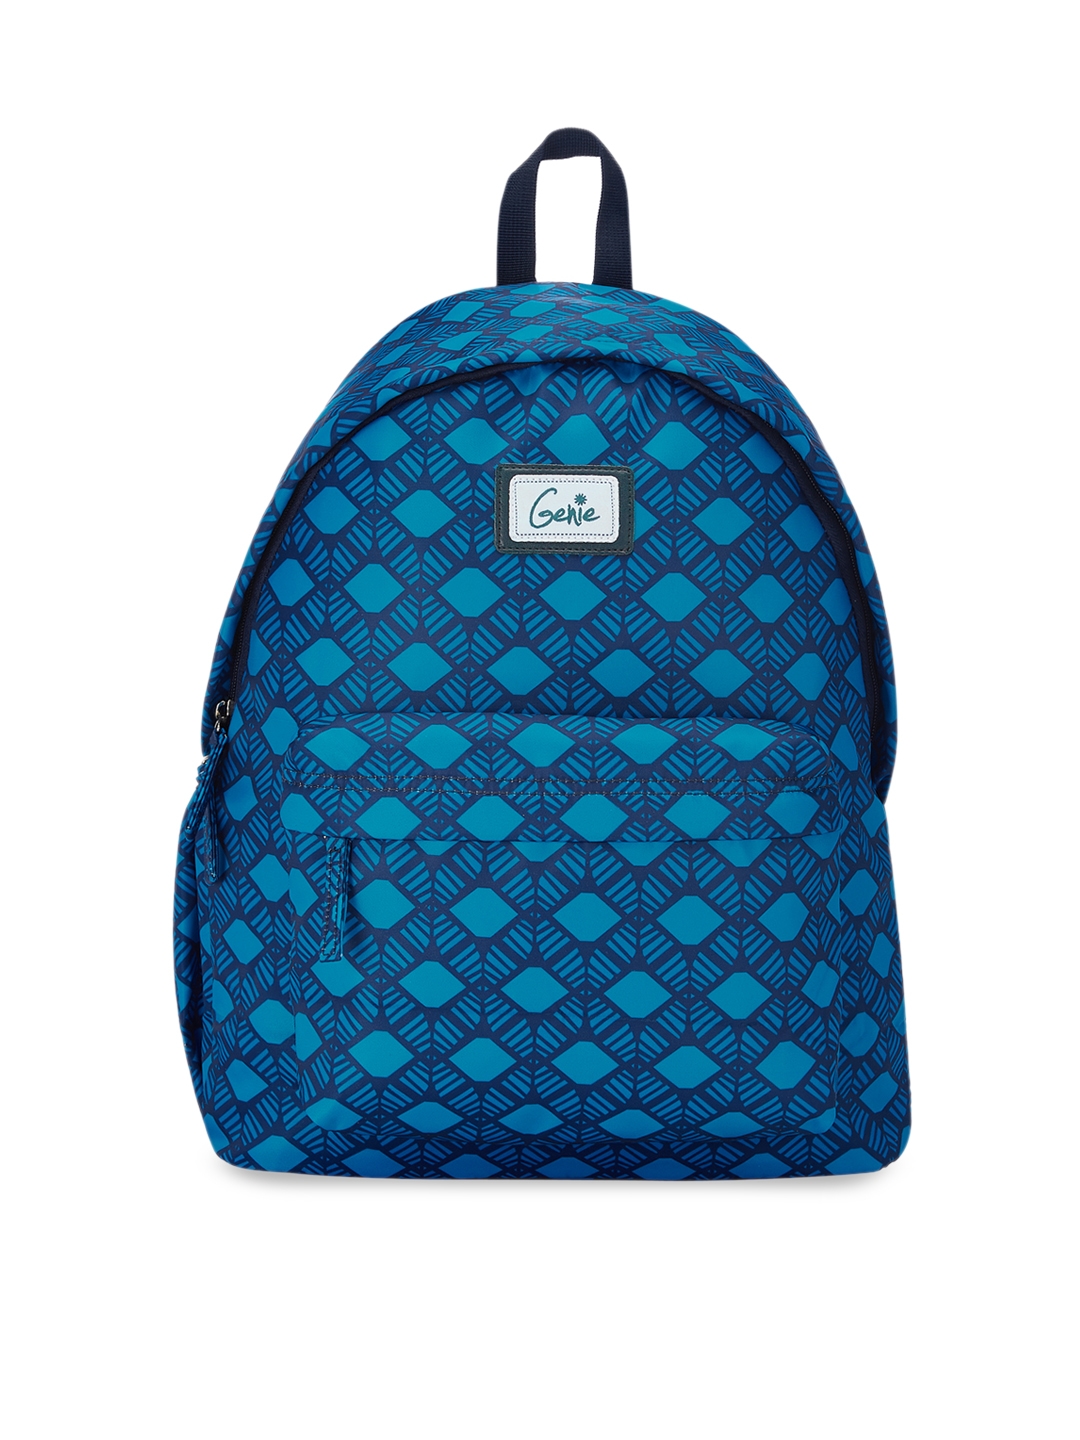 Genie Unisex Blue Geometric Print 14 inches Small Backpack